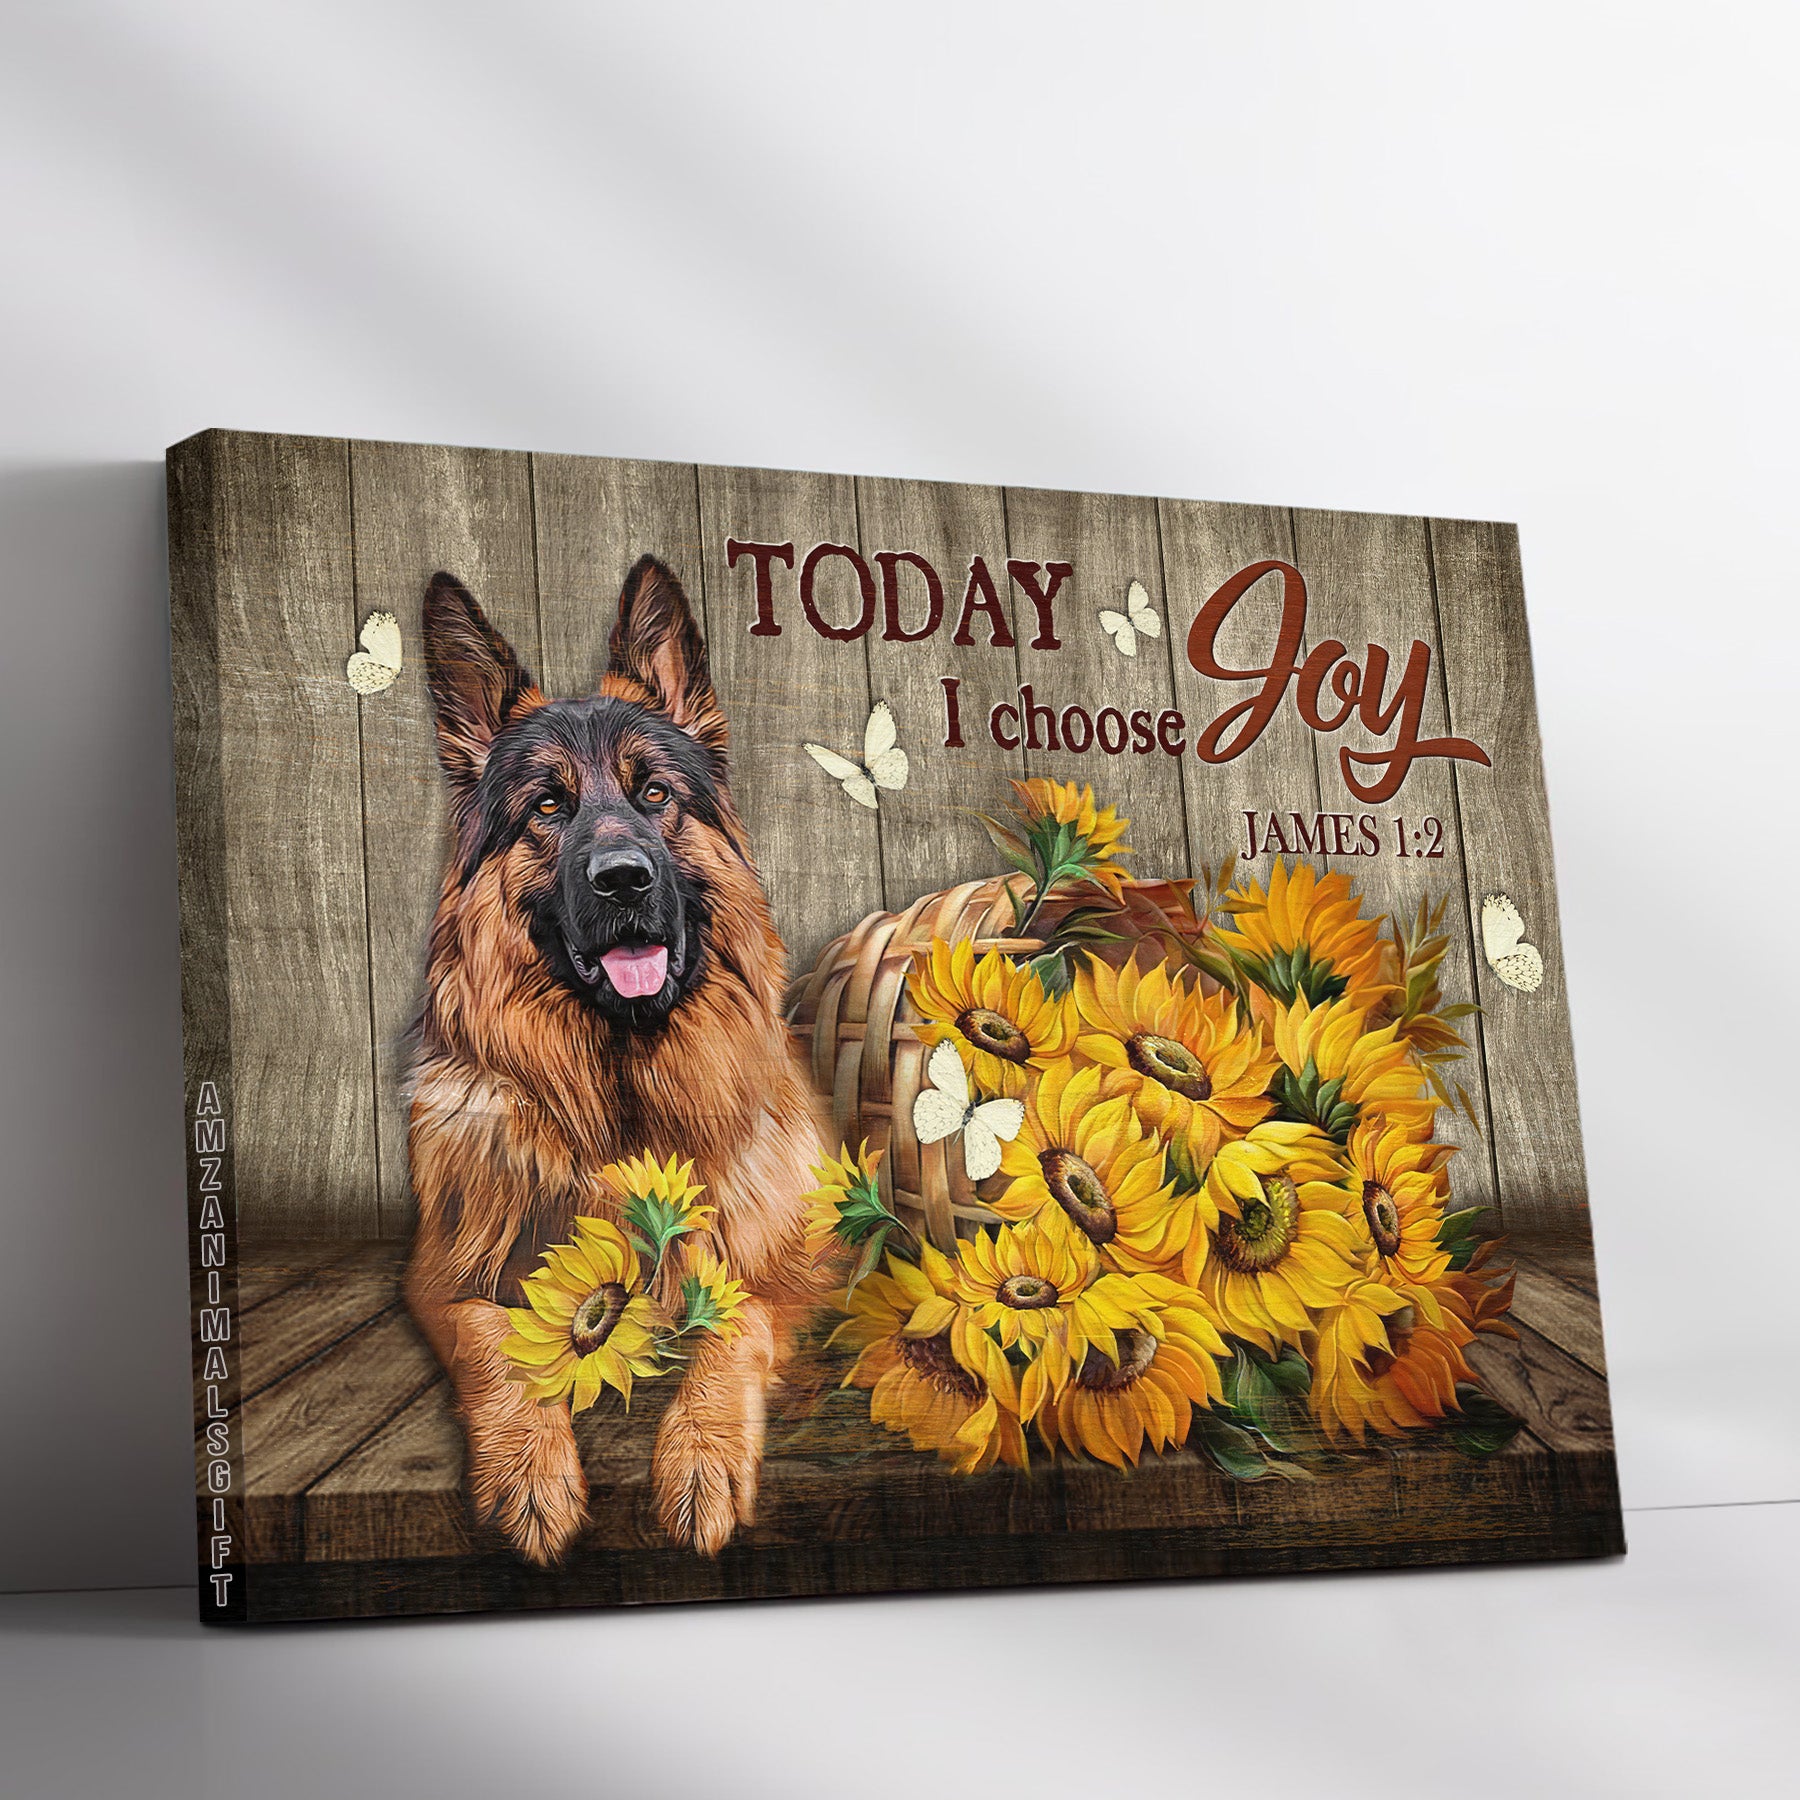 German Shepherd & Jesus Premium Wrapped Landscape Canvas - Sunflower Vase, German Shepherd, Butterfly, Today I Choose Joy - Perfect Gift For Christian